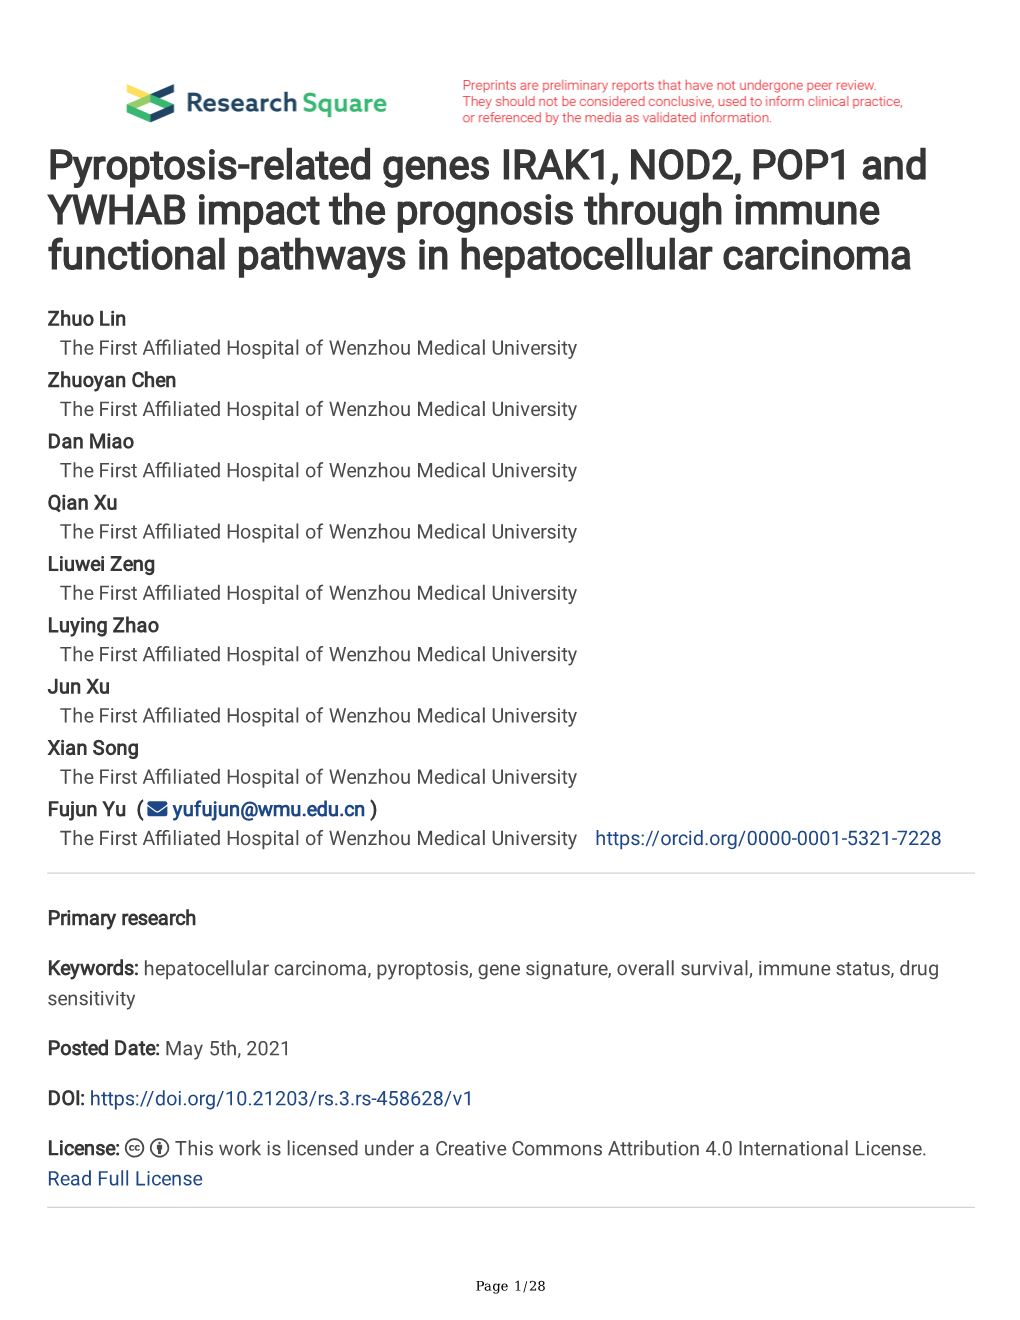 Pyroptosis-Related Genes IRAK1, NOD2, POP1 and YWHAB Impact the Prognosis Through Immune Functional Pathways in Hepatocellular Carcinoma